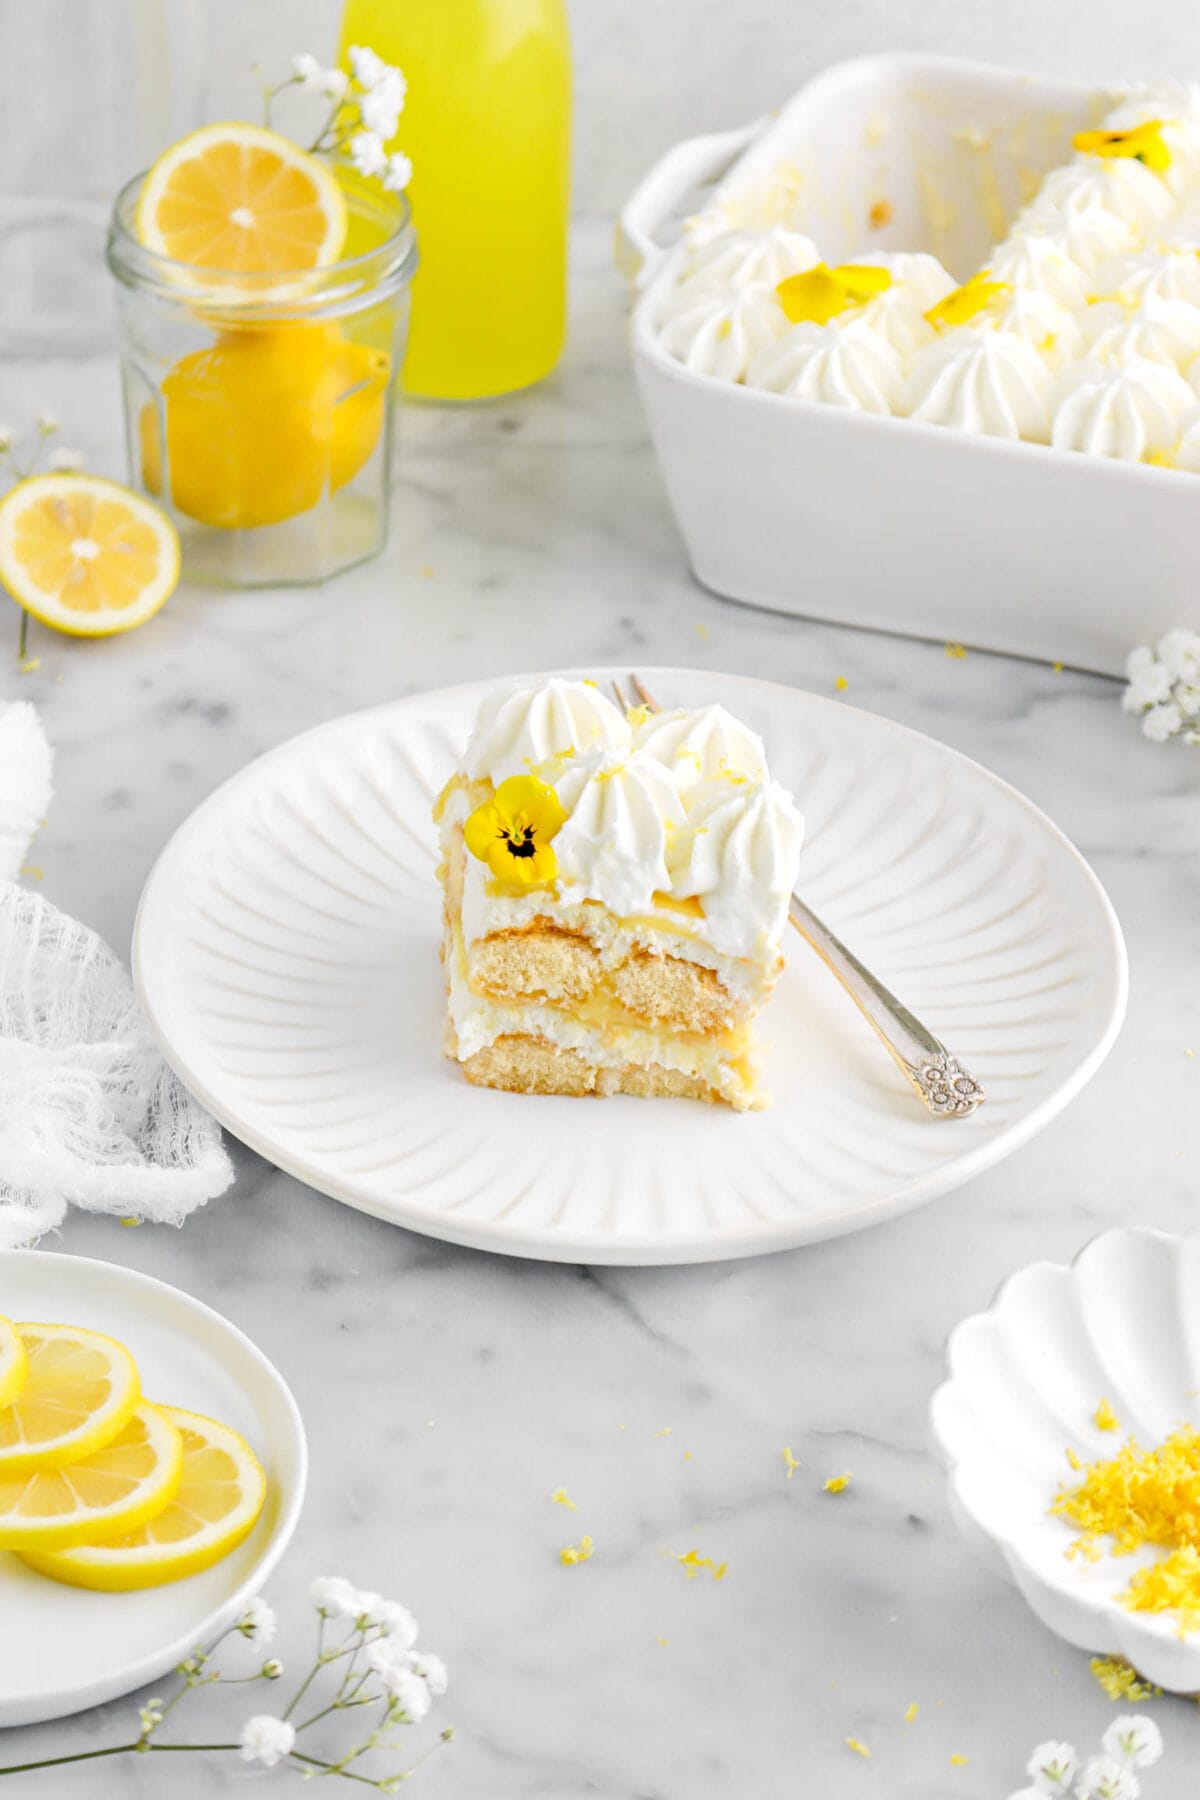 angled shot of lemon tiramisu on white plate with fork beside with white flowers around, lemons, and white casserole with tiramisu behind.